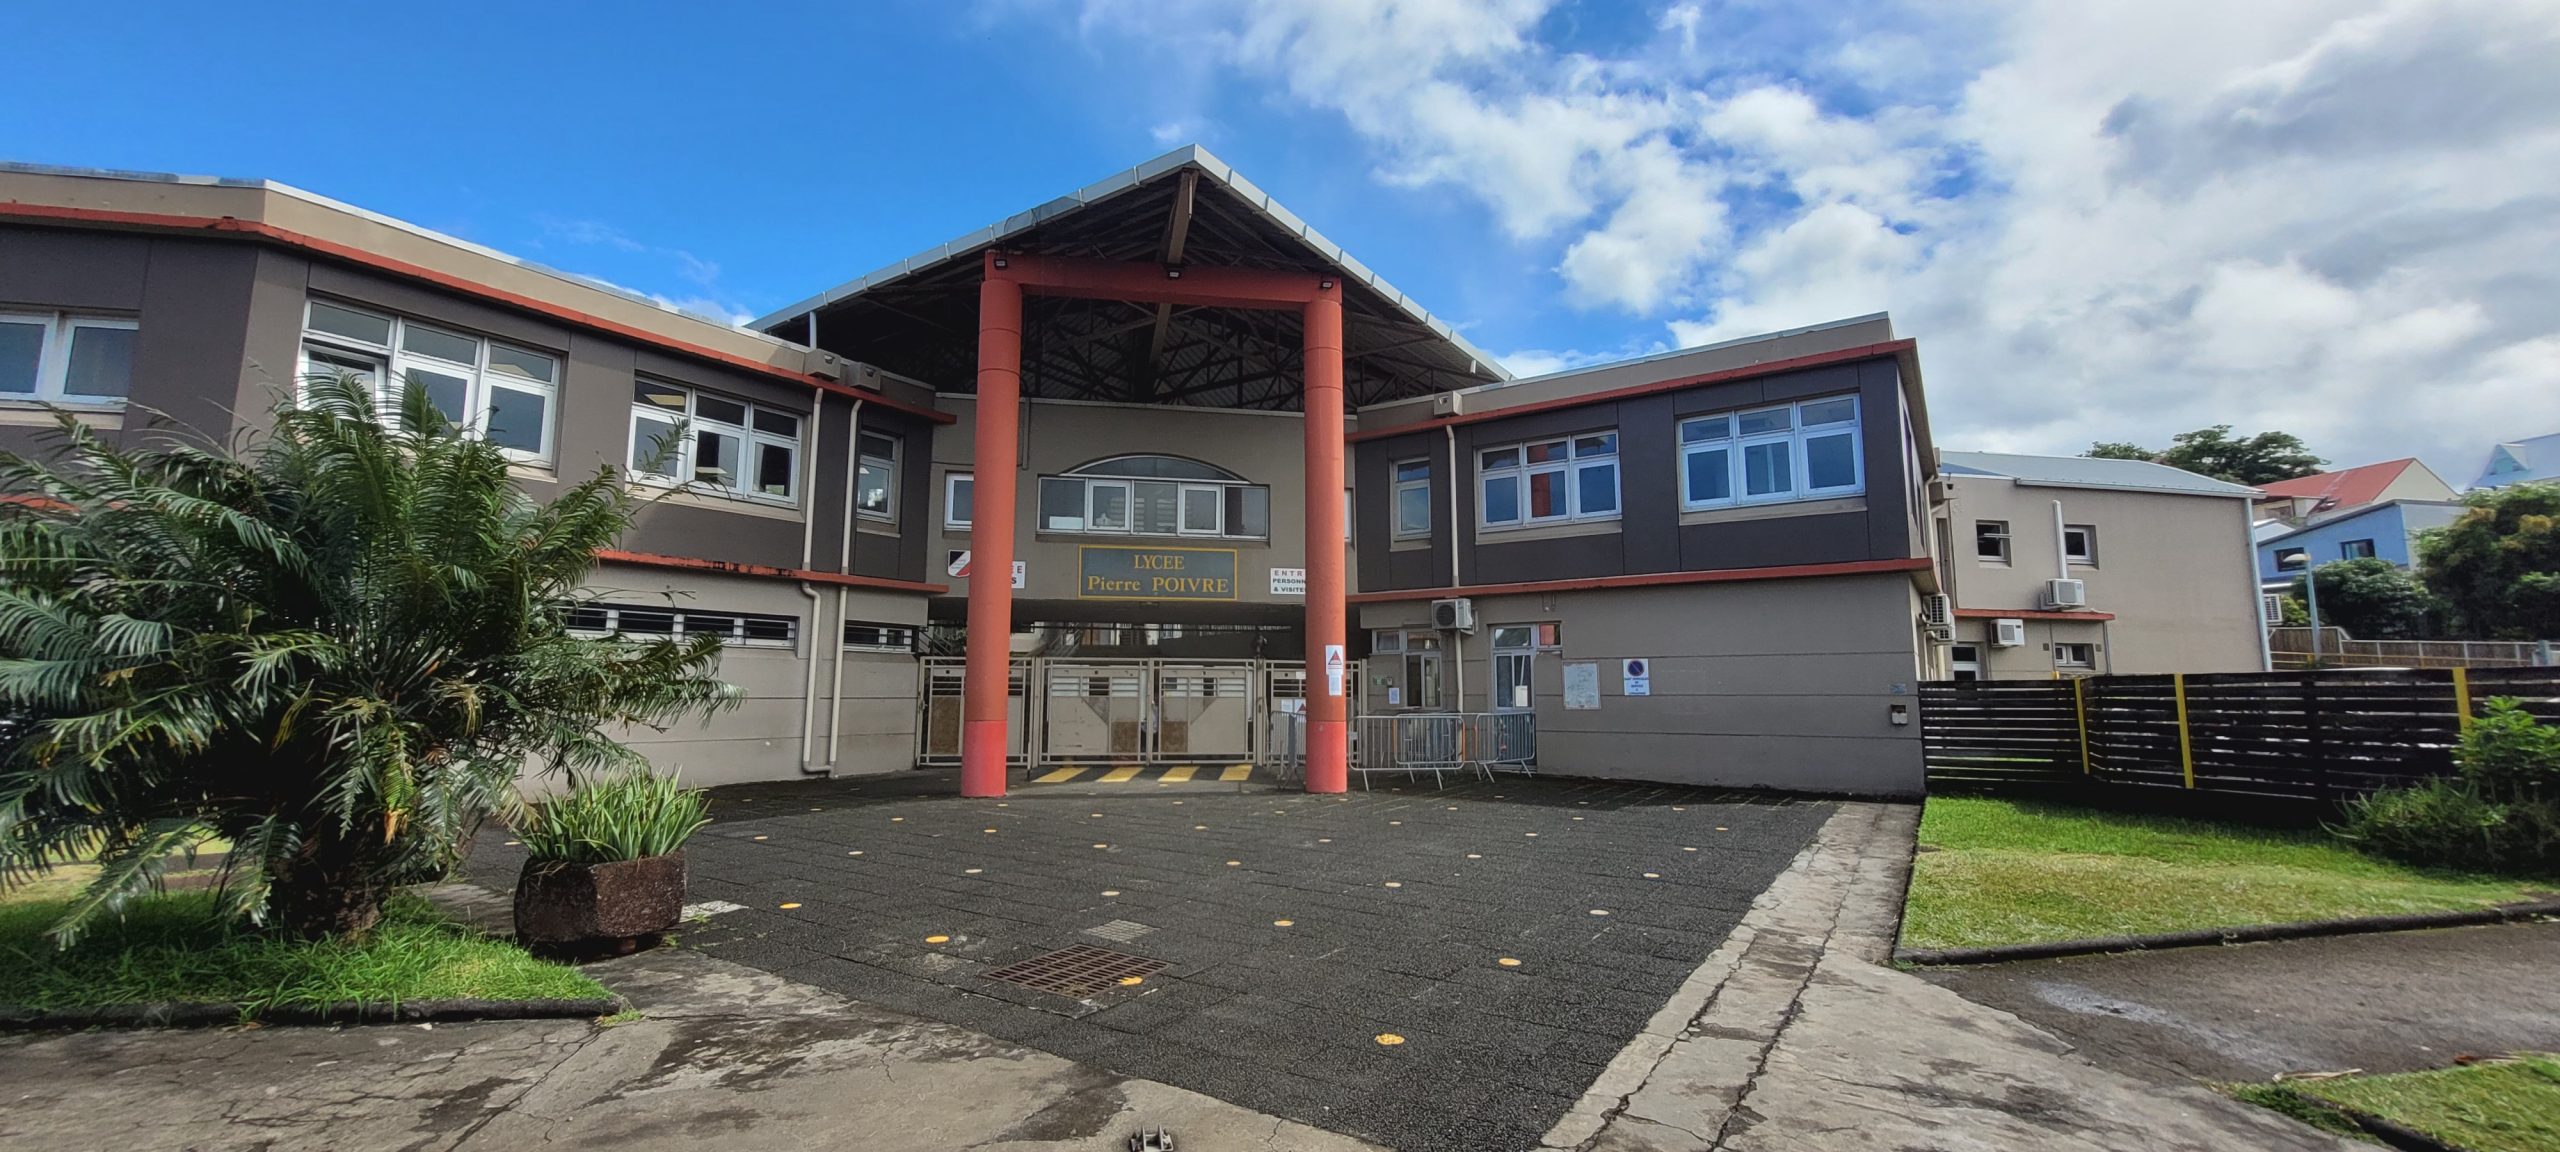 Reunion Island School System